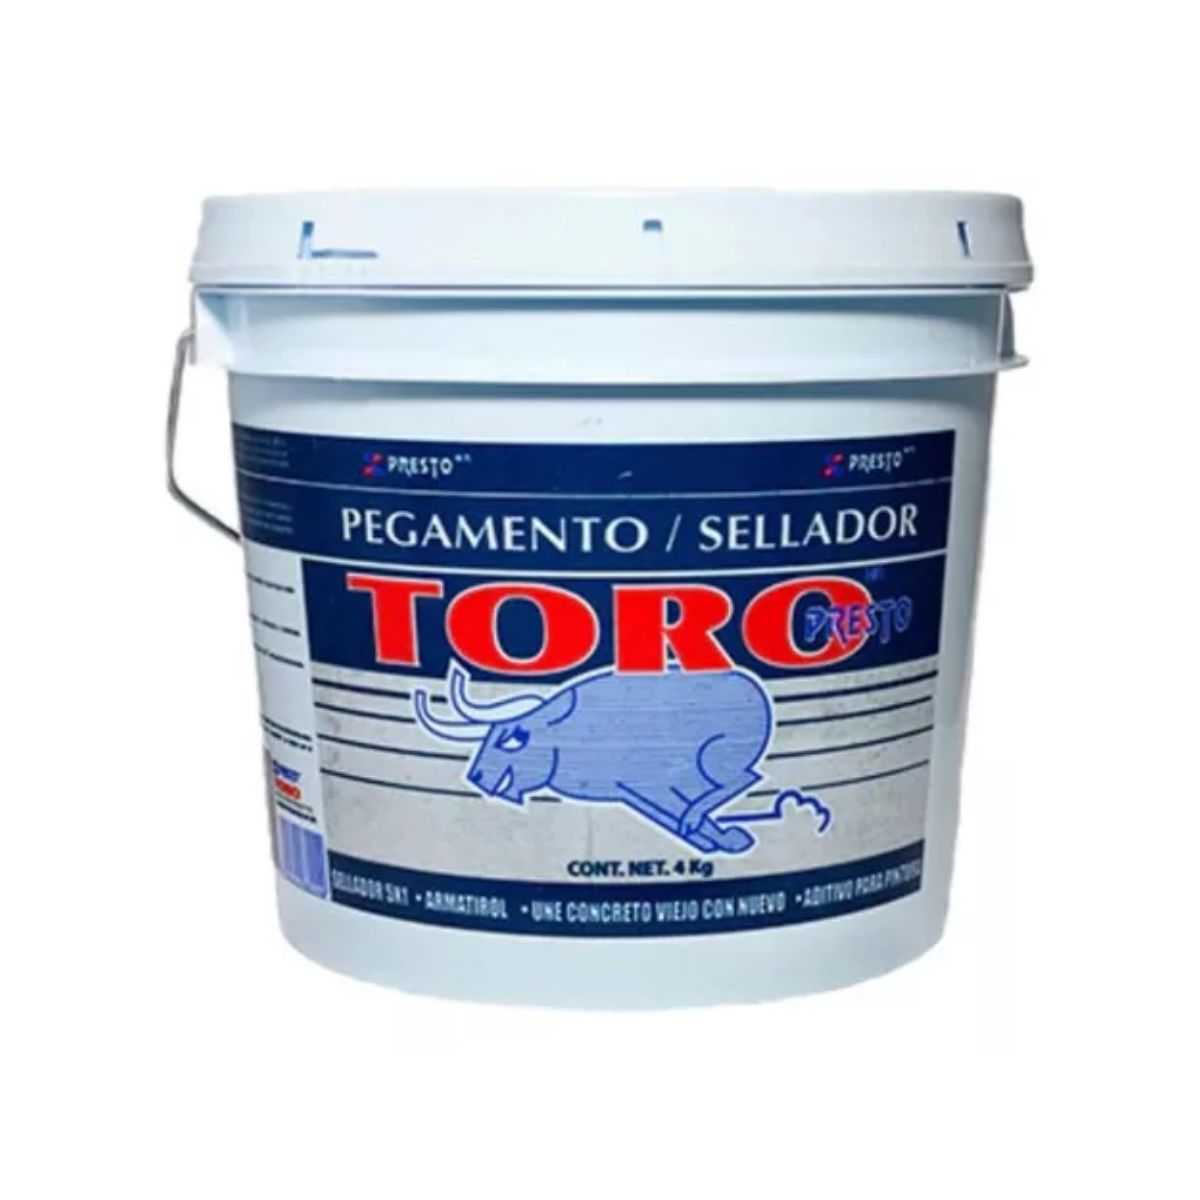 Pegamento Sellador Toro Blanco 4kg Presto